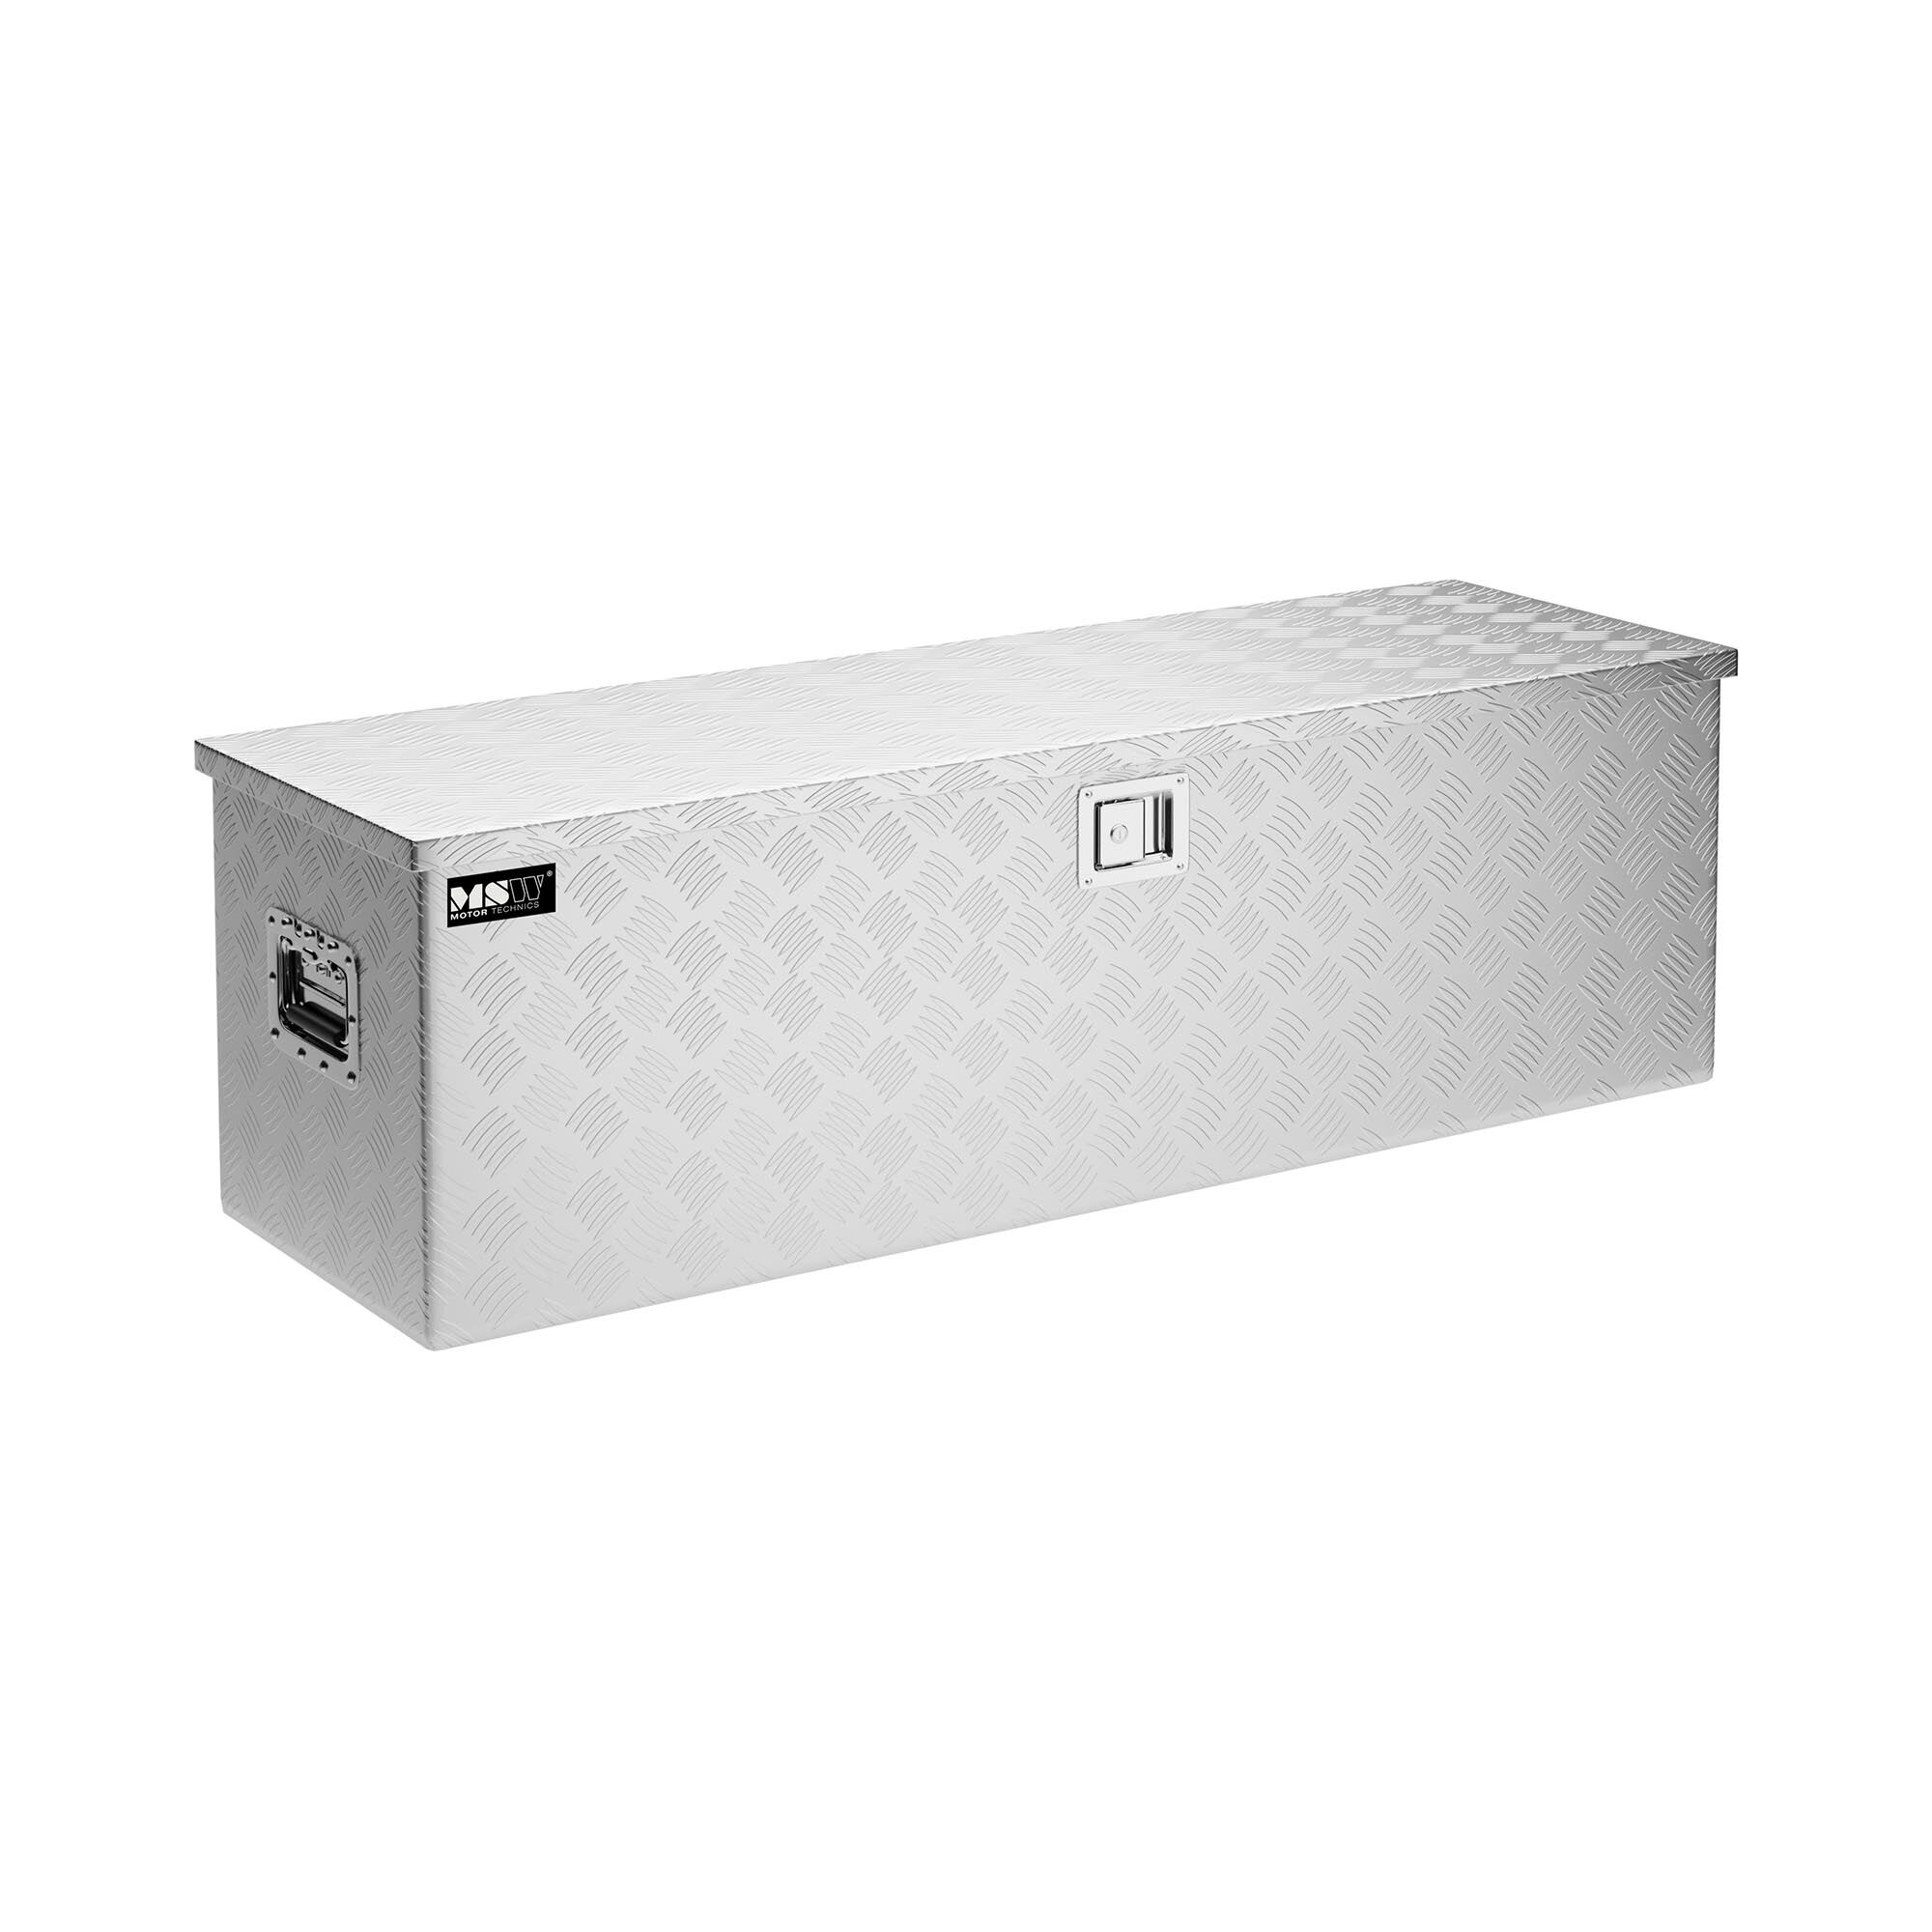 MSW Aluminium Tool Box - 124 x 38 x 38 cm - 150 L MSW-ATB-1230